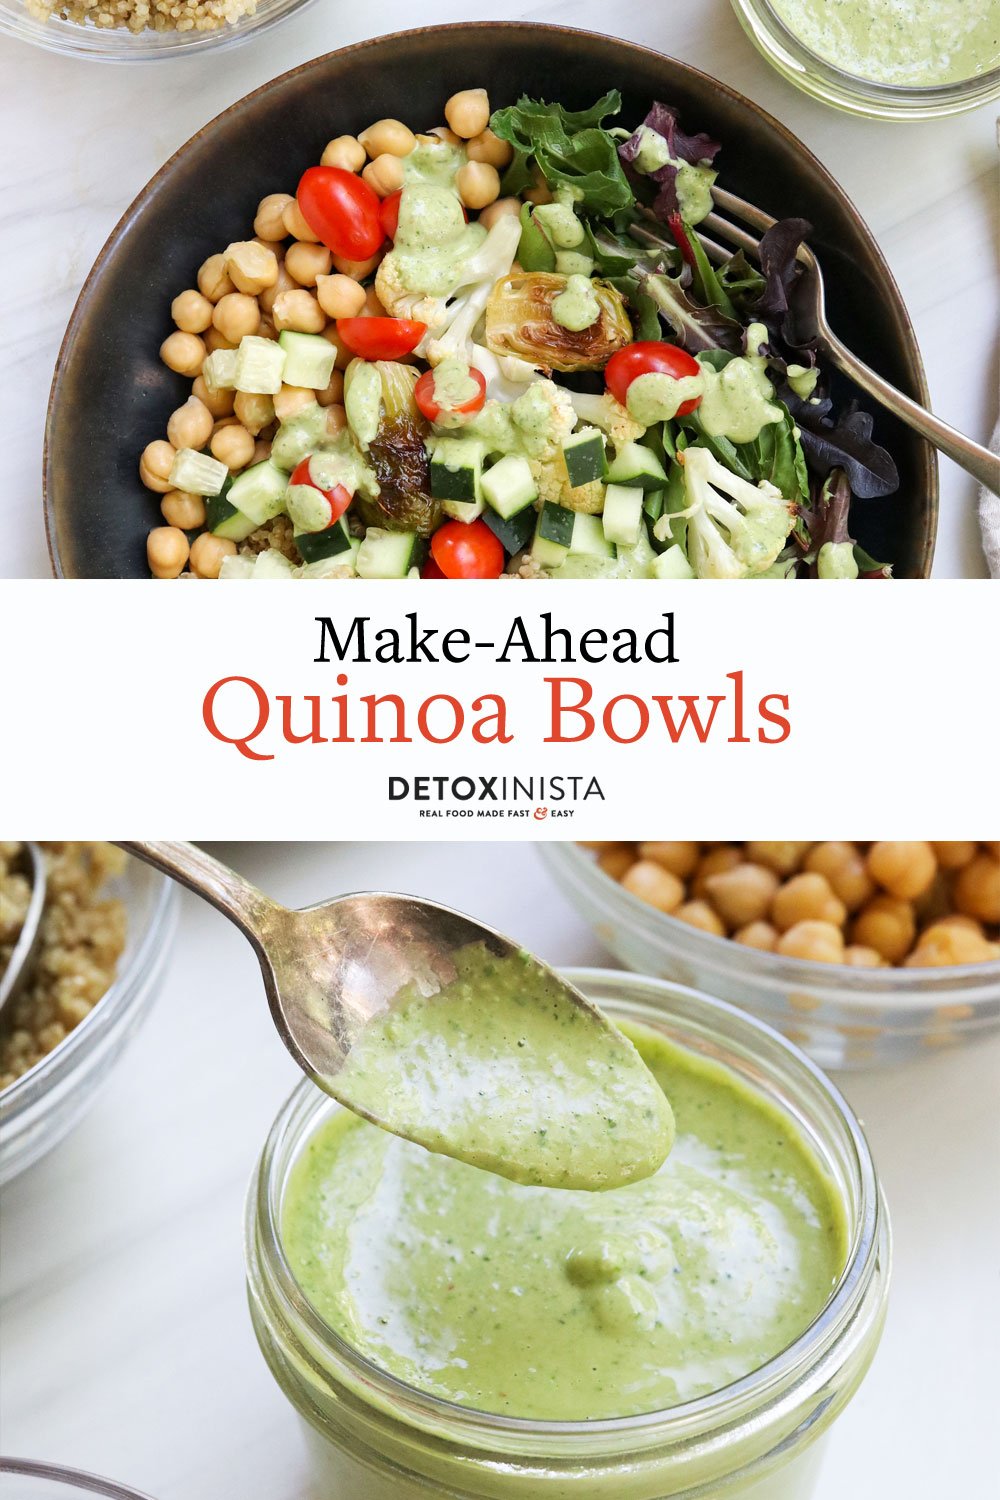 quinoa bowls pin for pinterest.